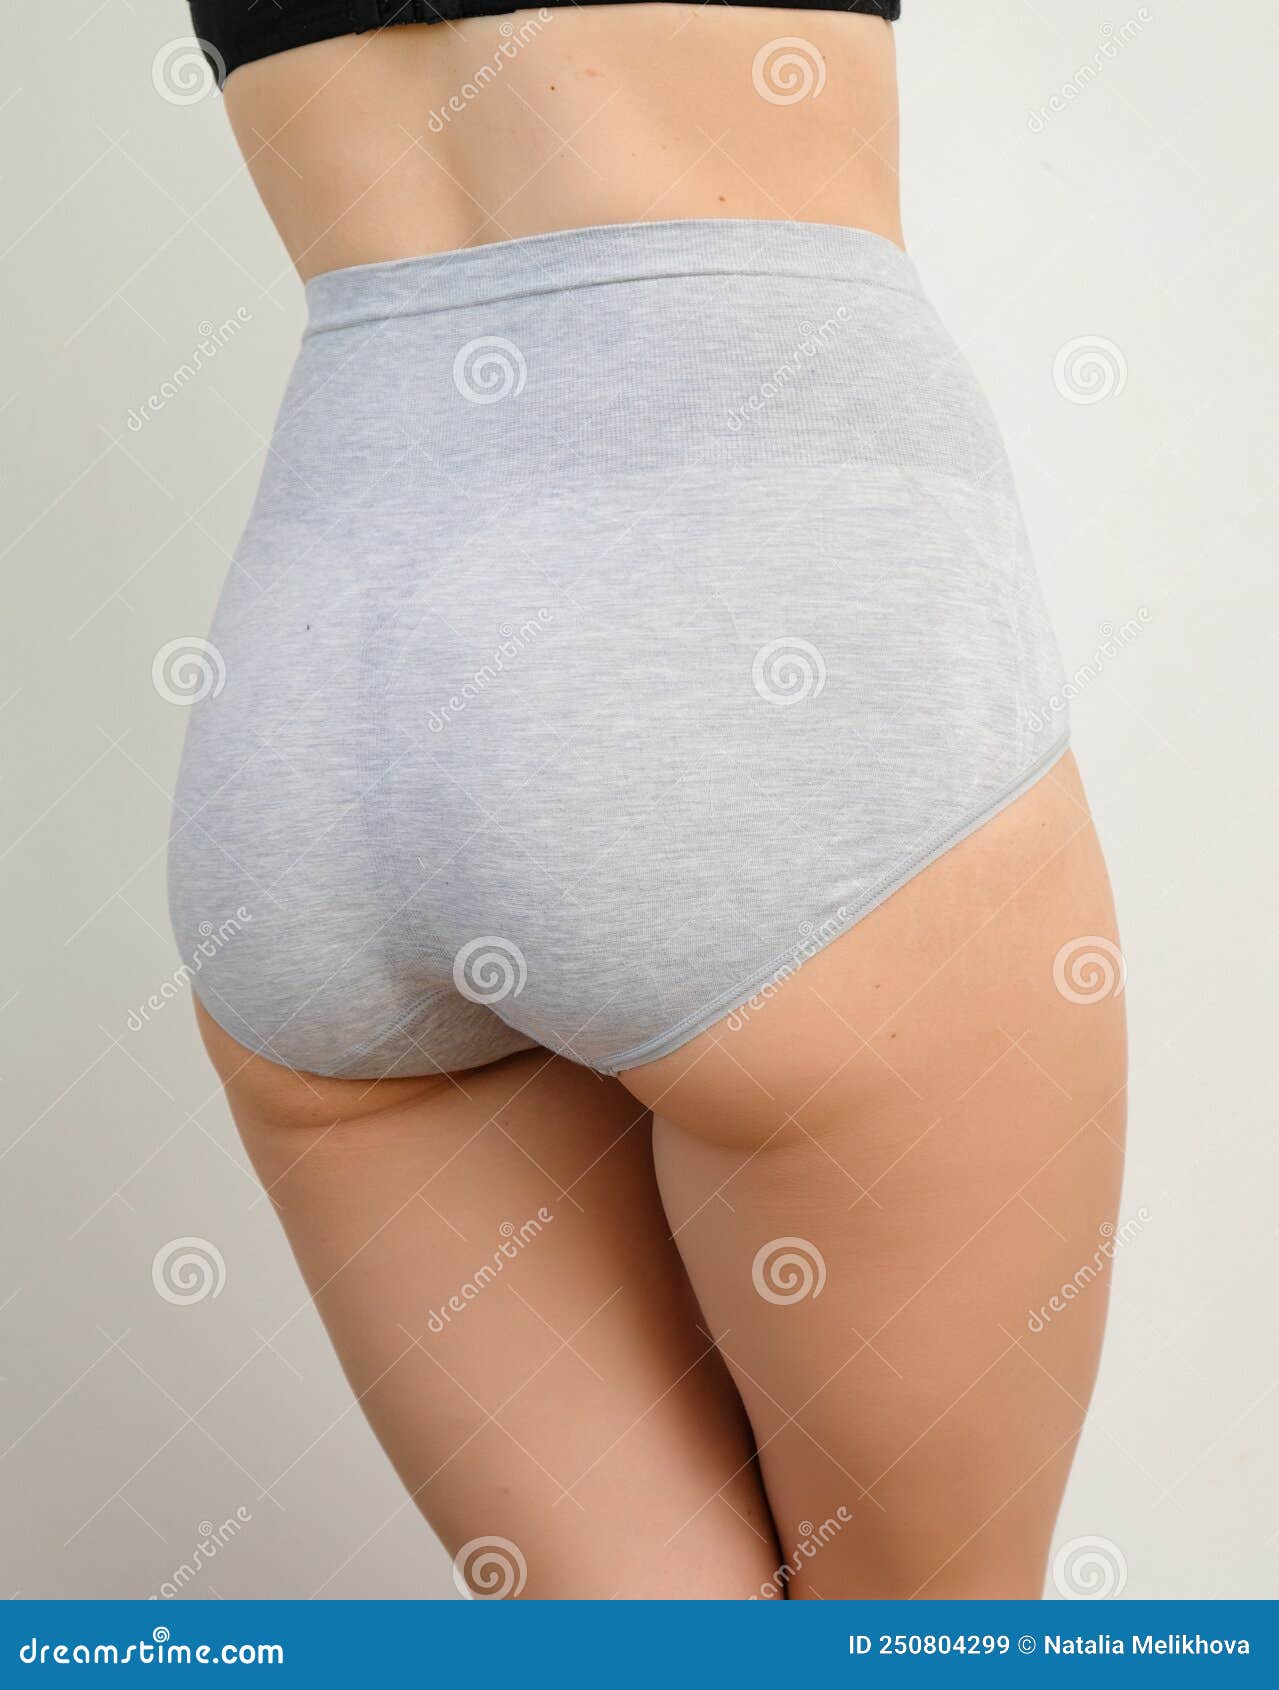 https://thumbs.dreamstime.com/z/close-up-portrait-naked-woman-body-gray-panties-plus-size-comfortable-underwear-close-up-portrait-naked-woman-body-250804299.jpg